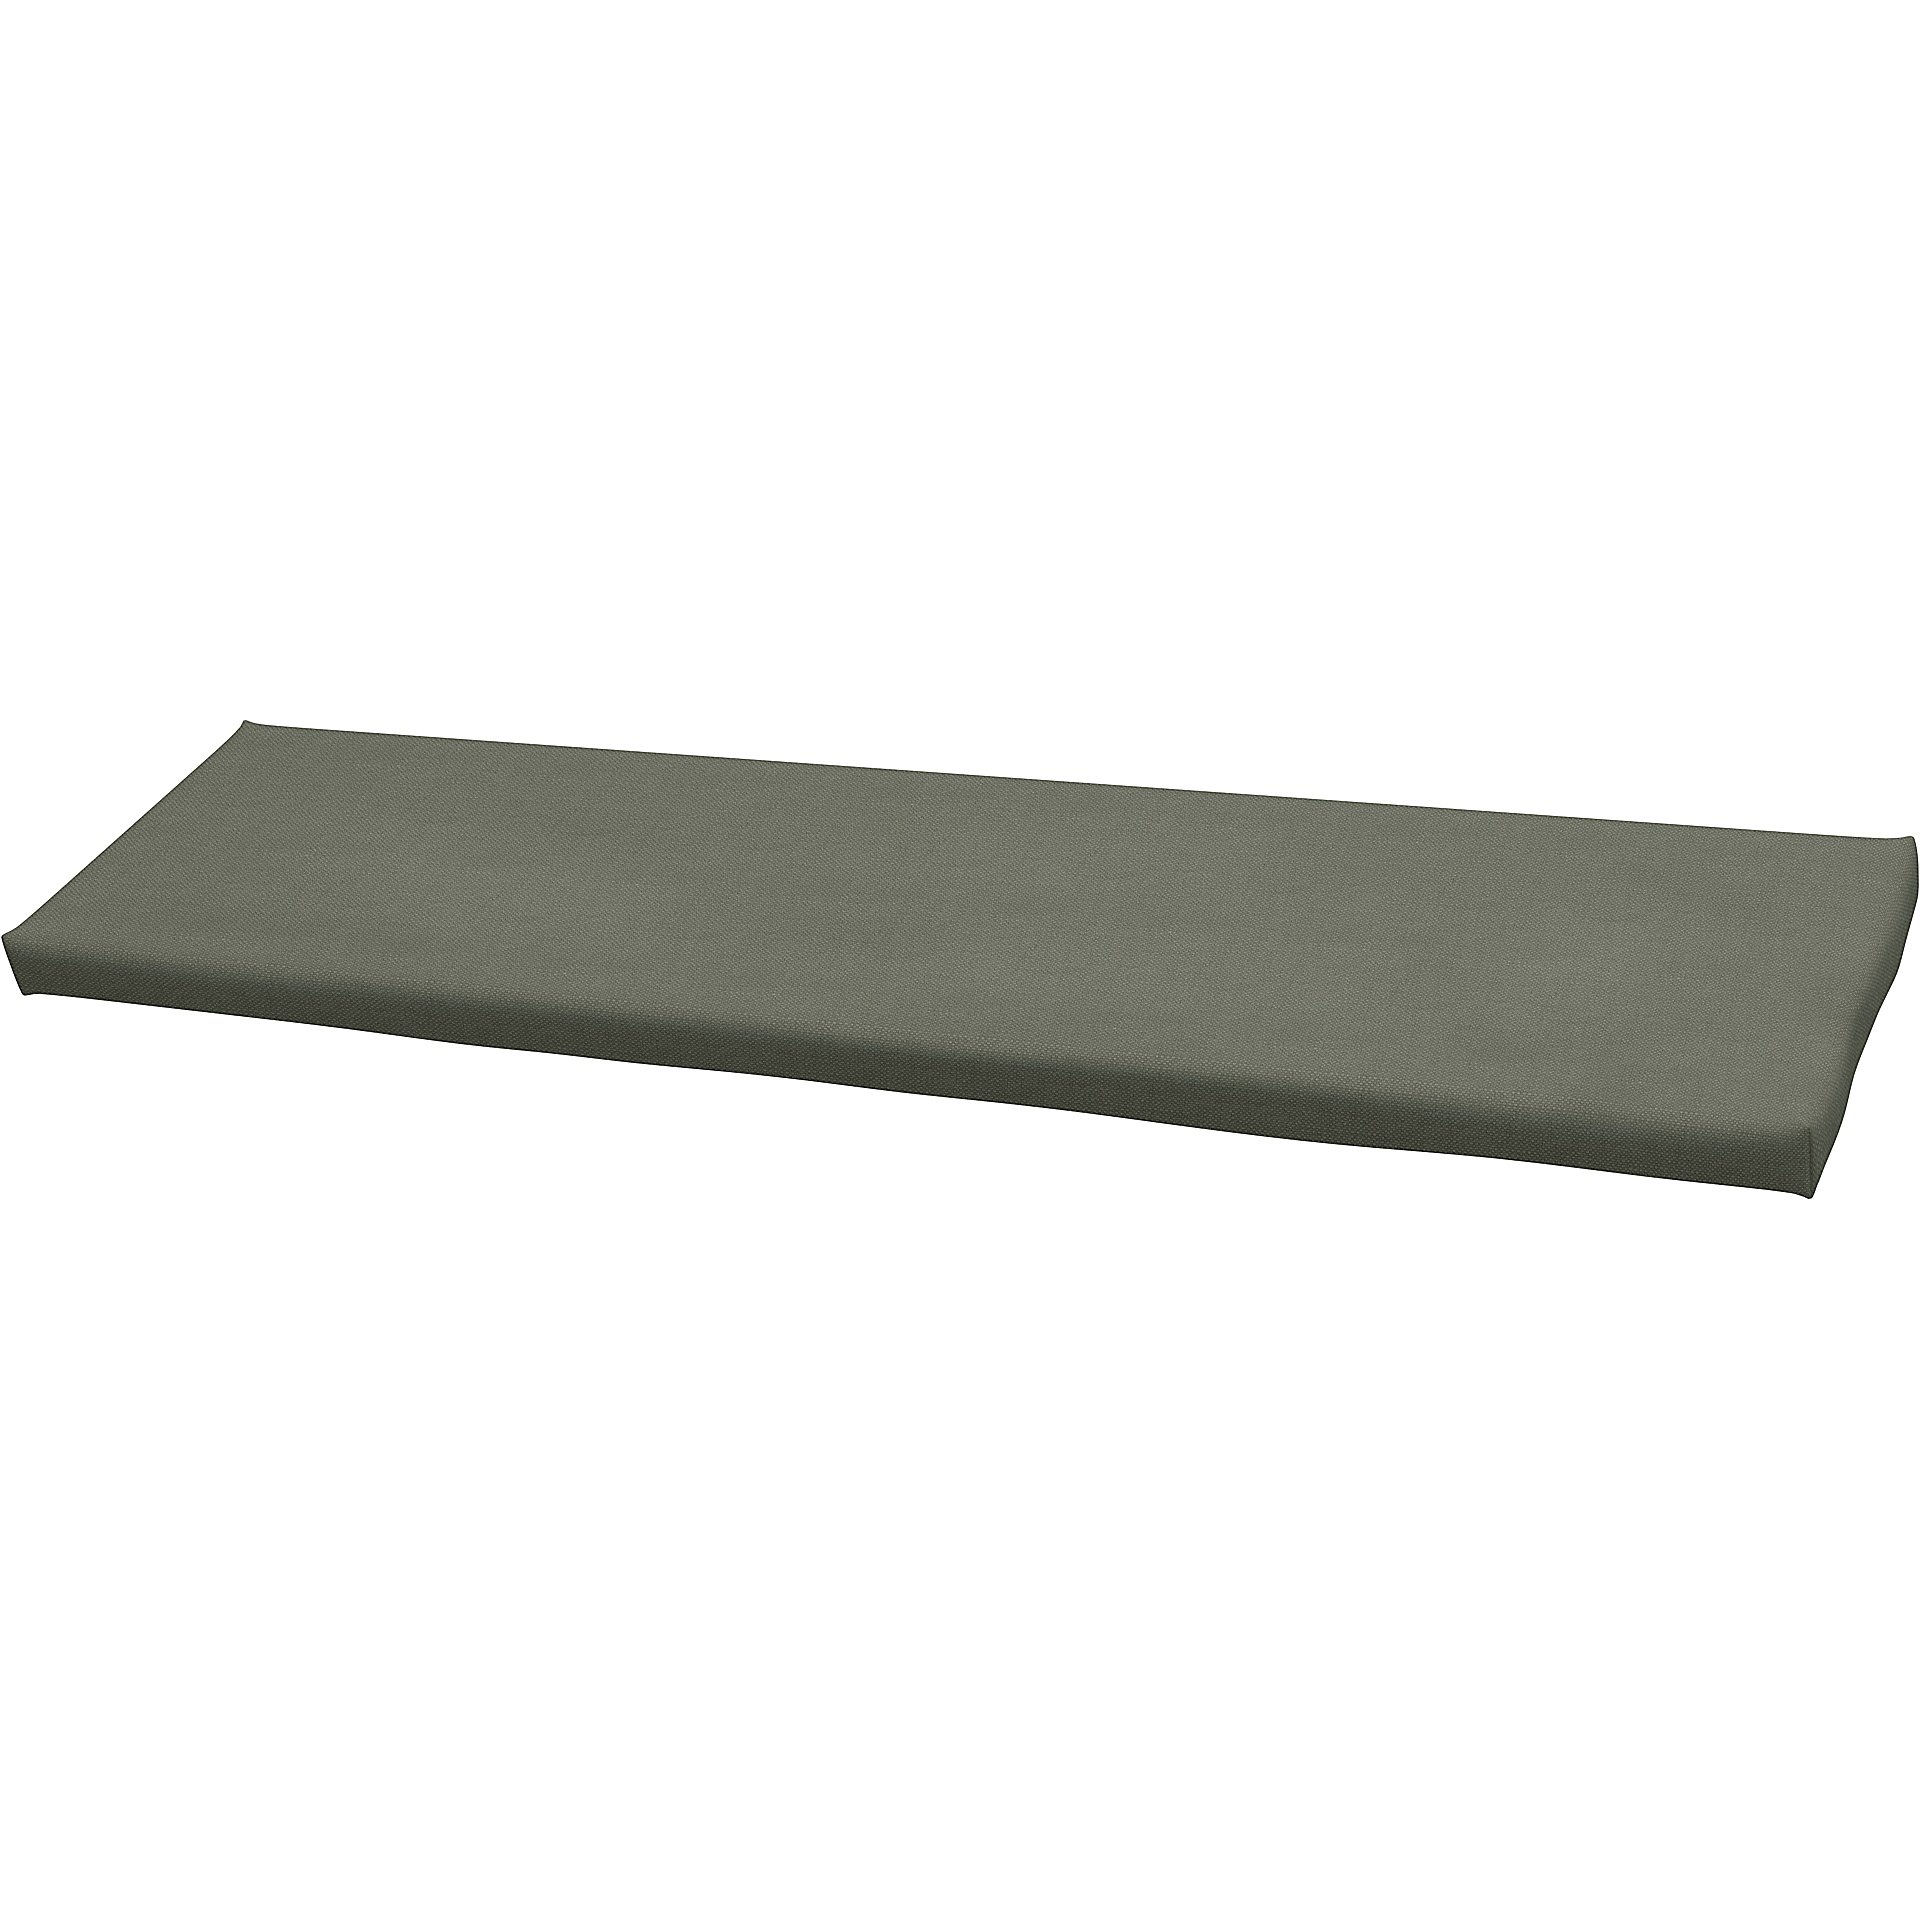 IKEA - Universal bench cushion cover 120x35x3,5 cm, Rosemary, Linen - Bemz